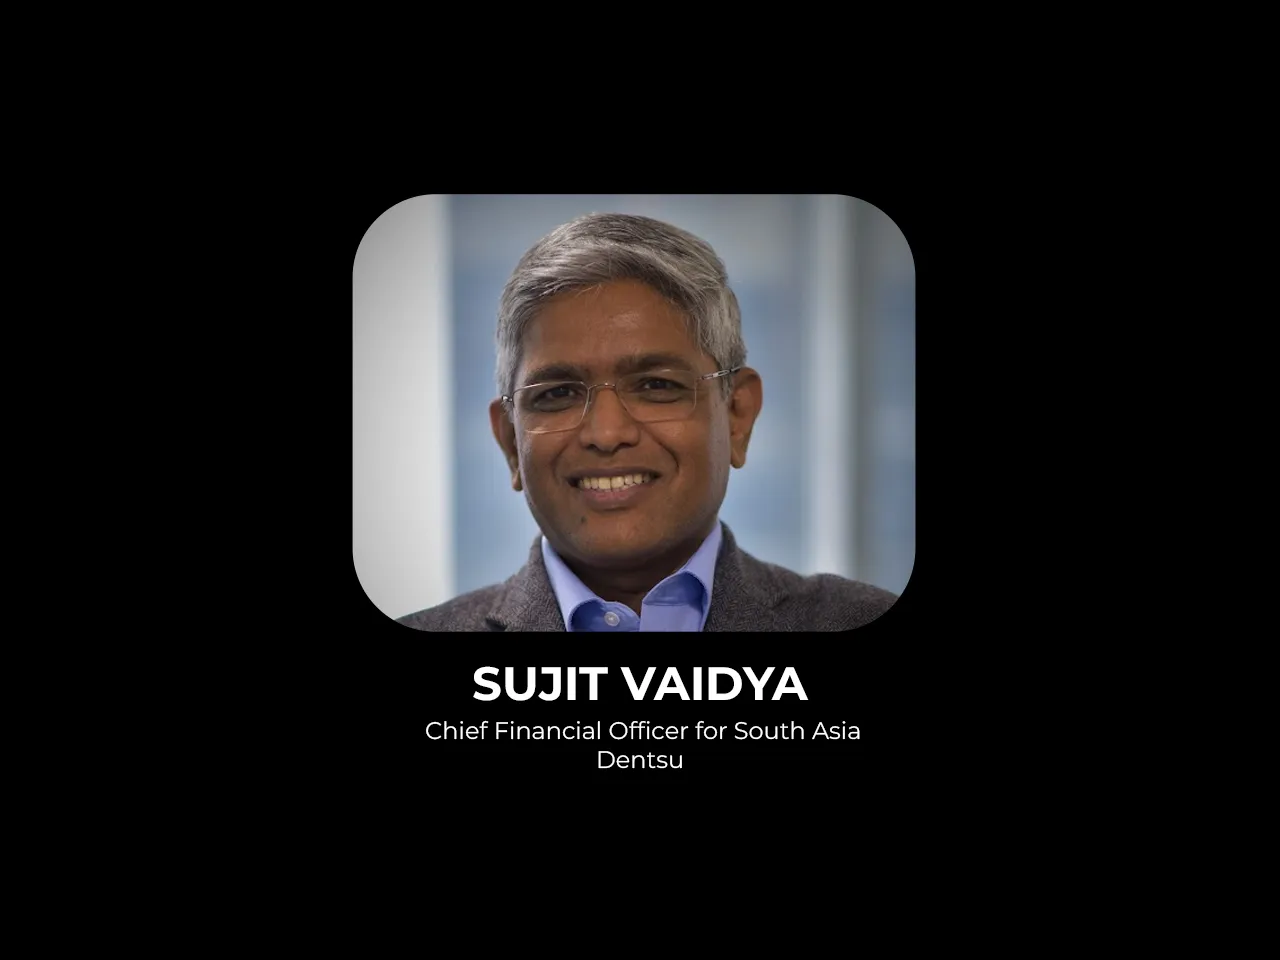  Sujit Vaidya